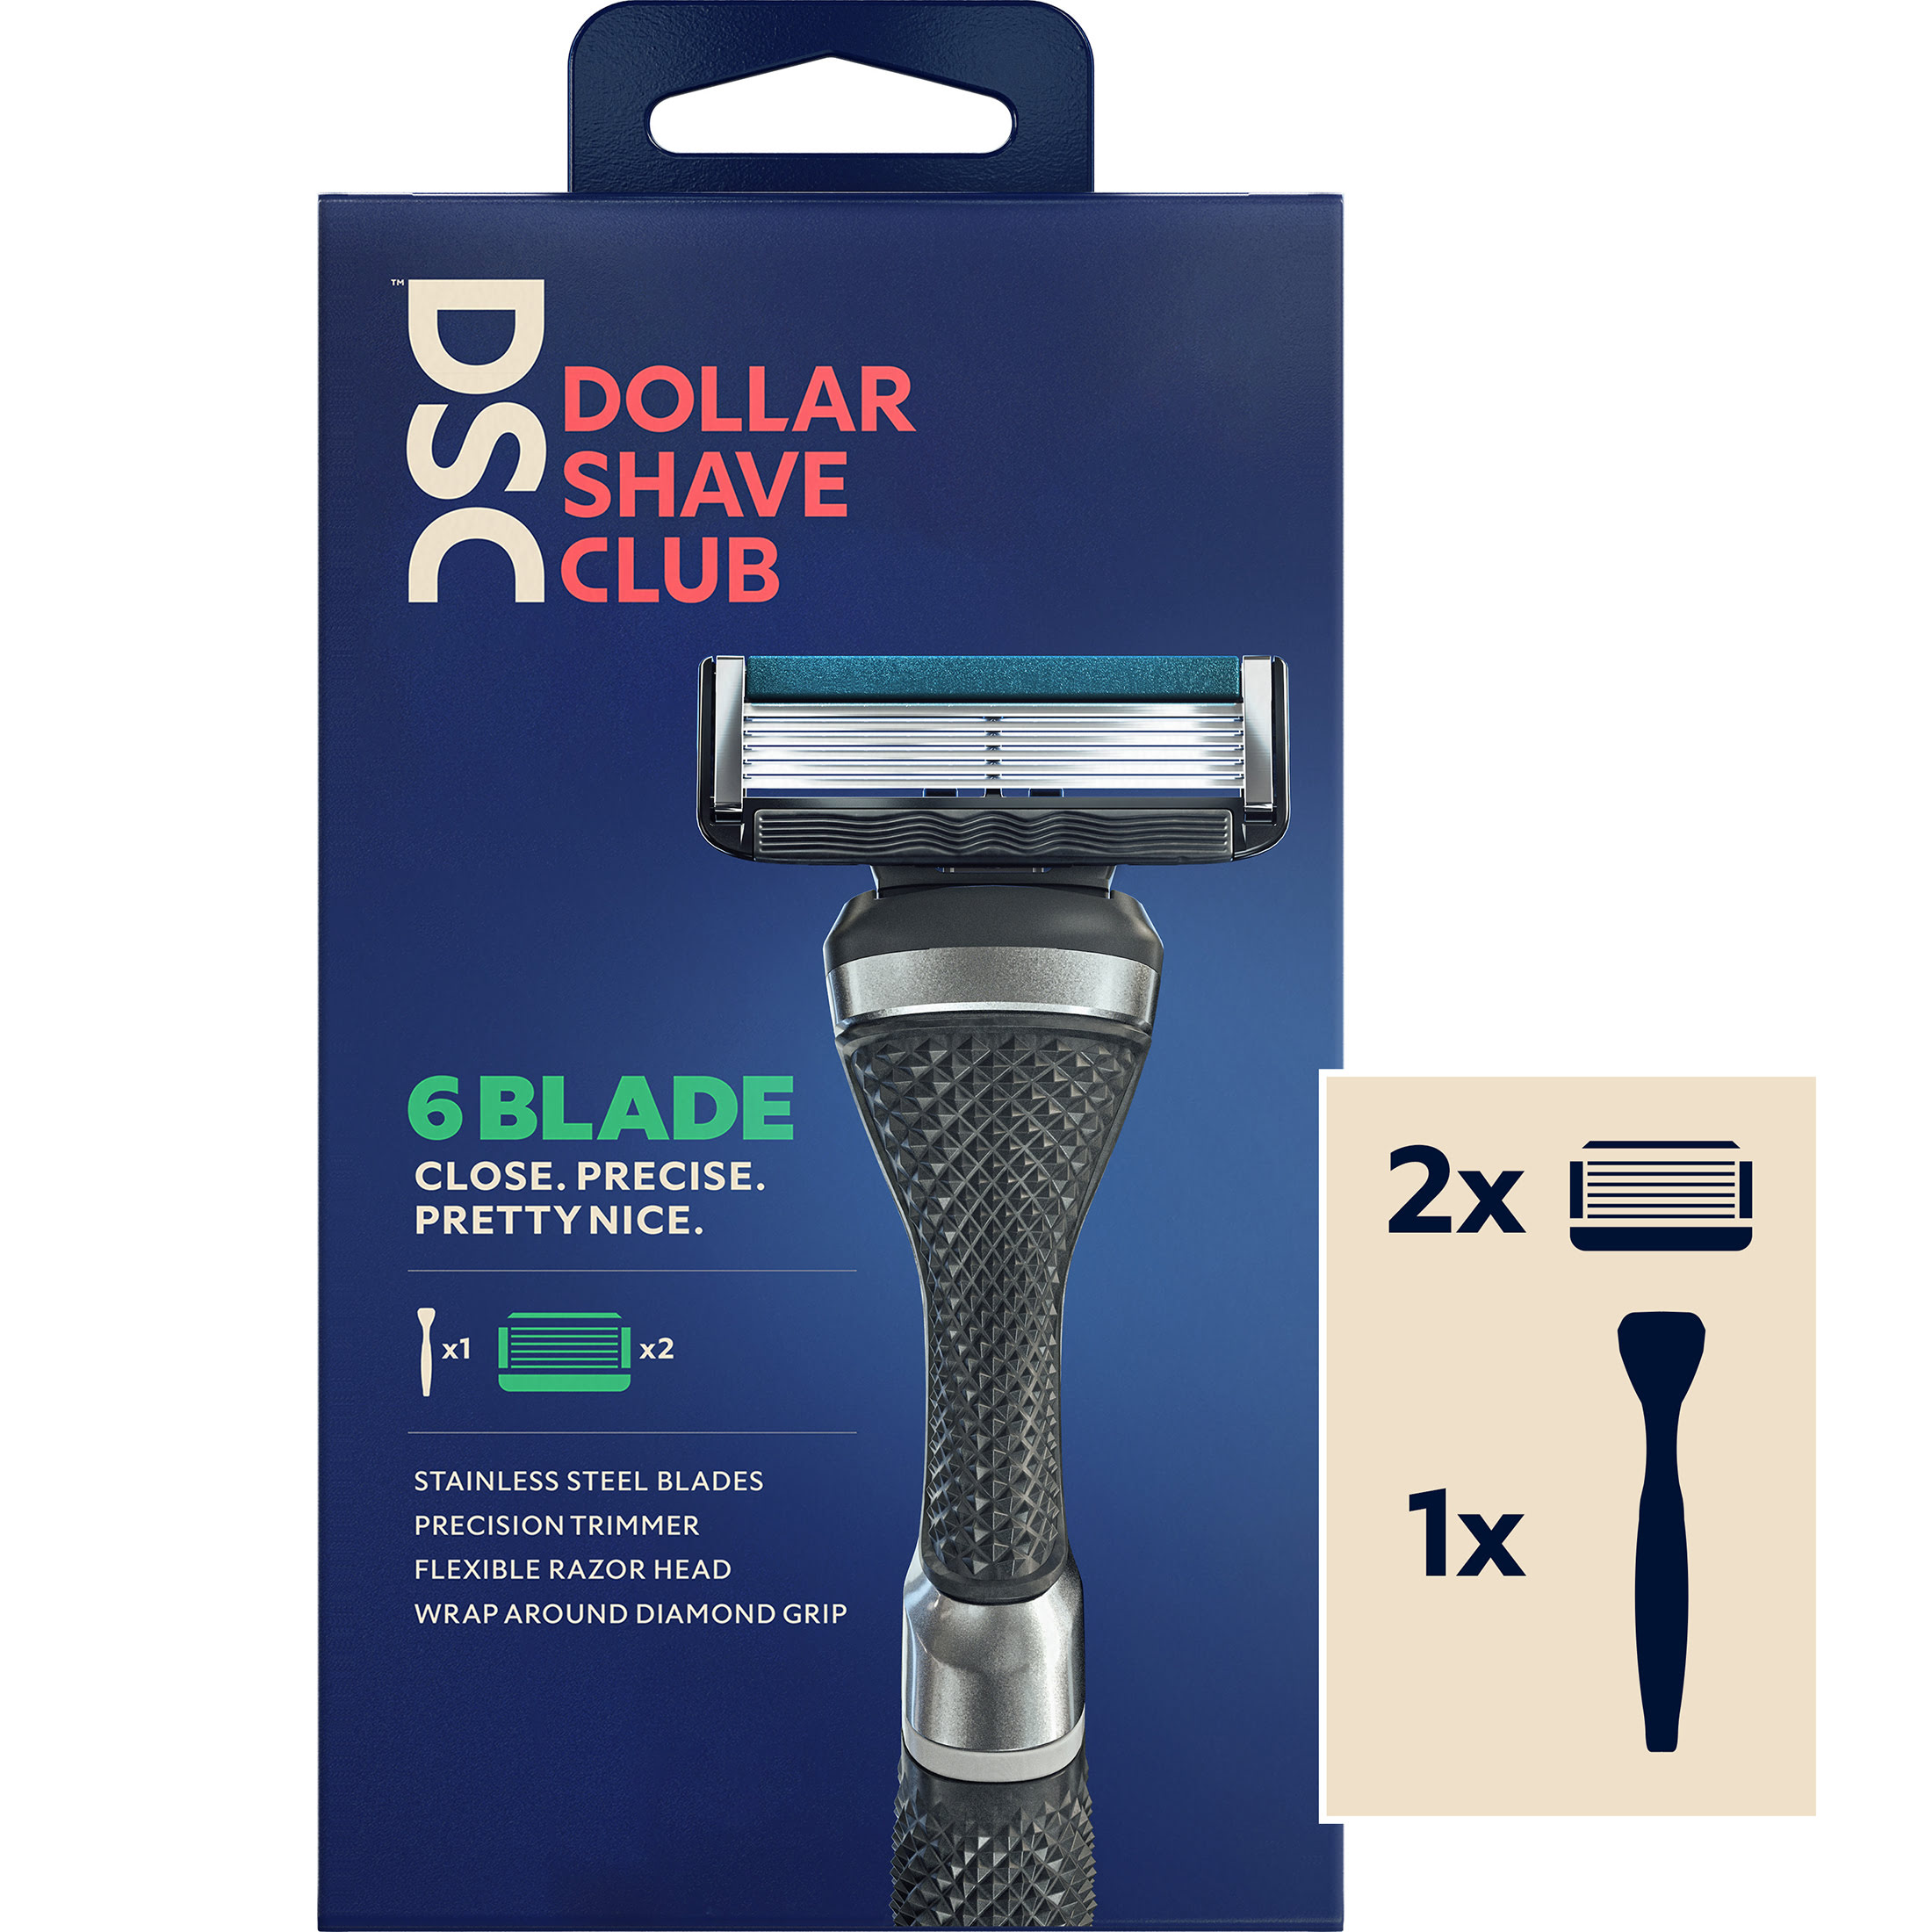 Dollar Shave Club 6-Blade Razor Starter Set 1 handle, 2x 6-blade cartridges  - Walmart.com